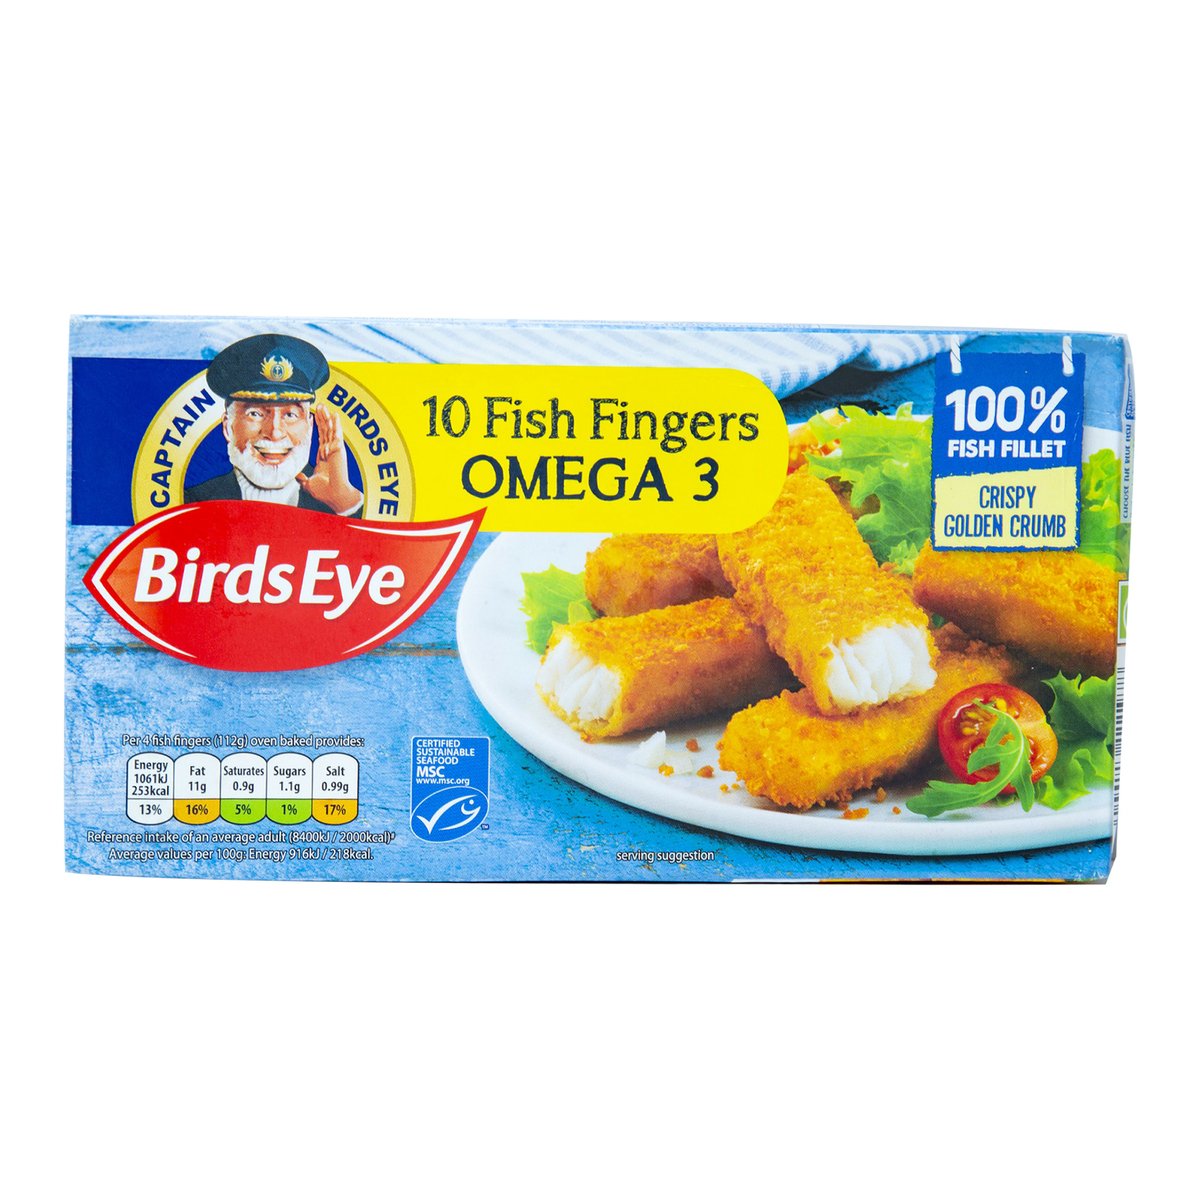 Birds Eye Fish Fingers Omega 3 10pcs